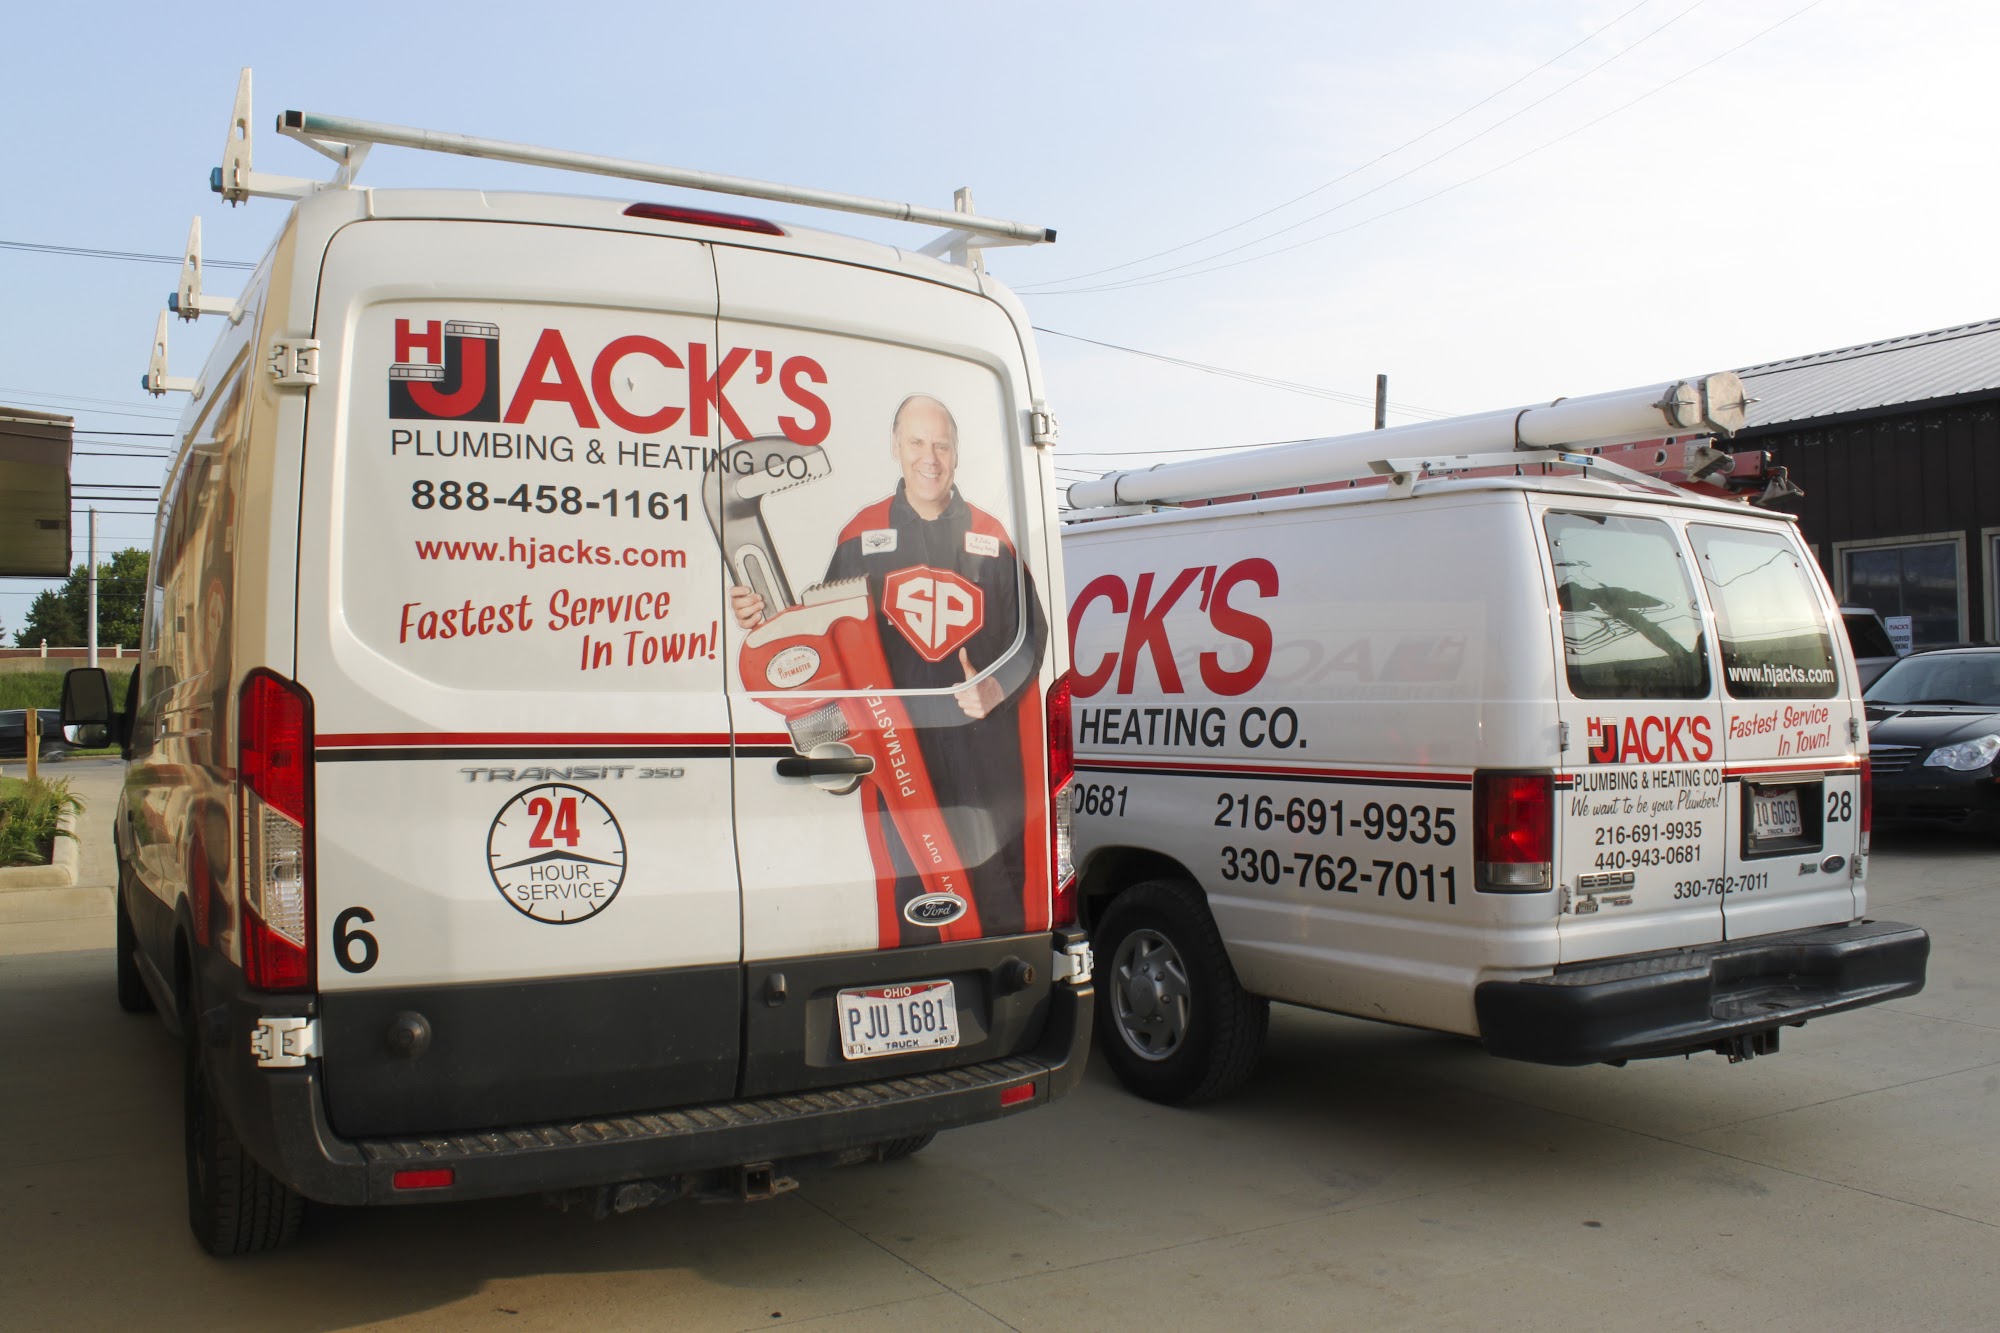 H. Jack’s Plumbing and Heating Cleveland 29930 Lakeland Blvd, Wickliffe Ohio 44092